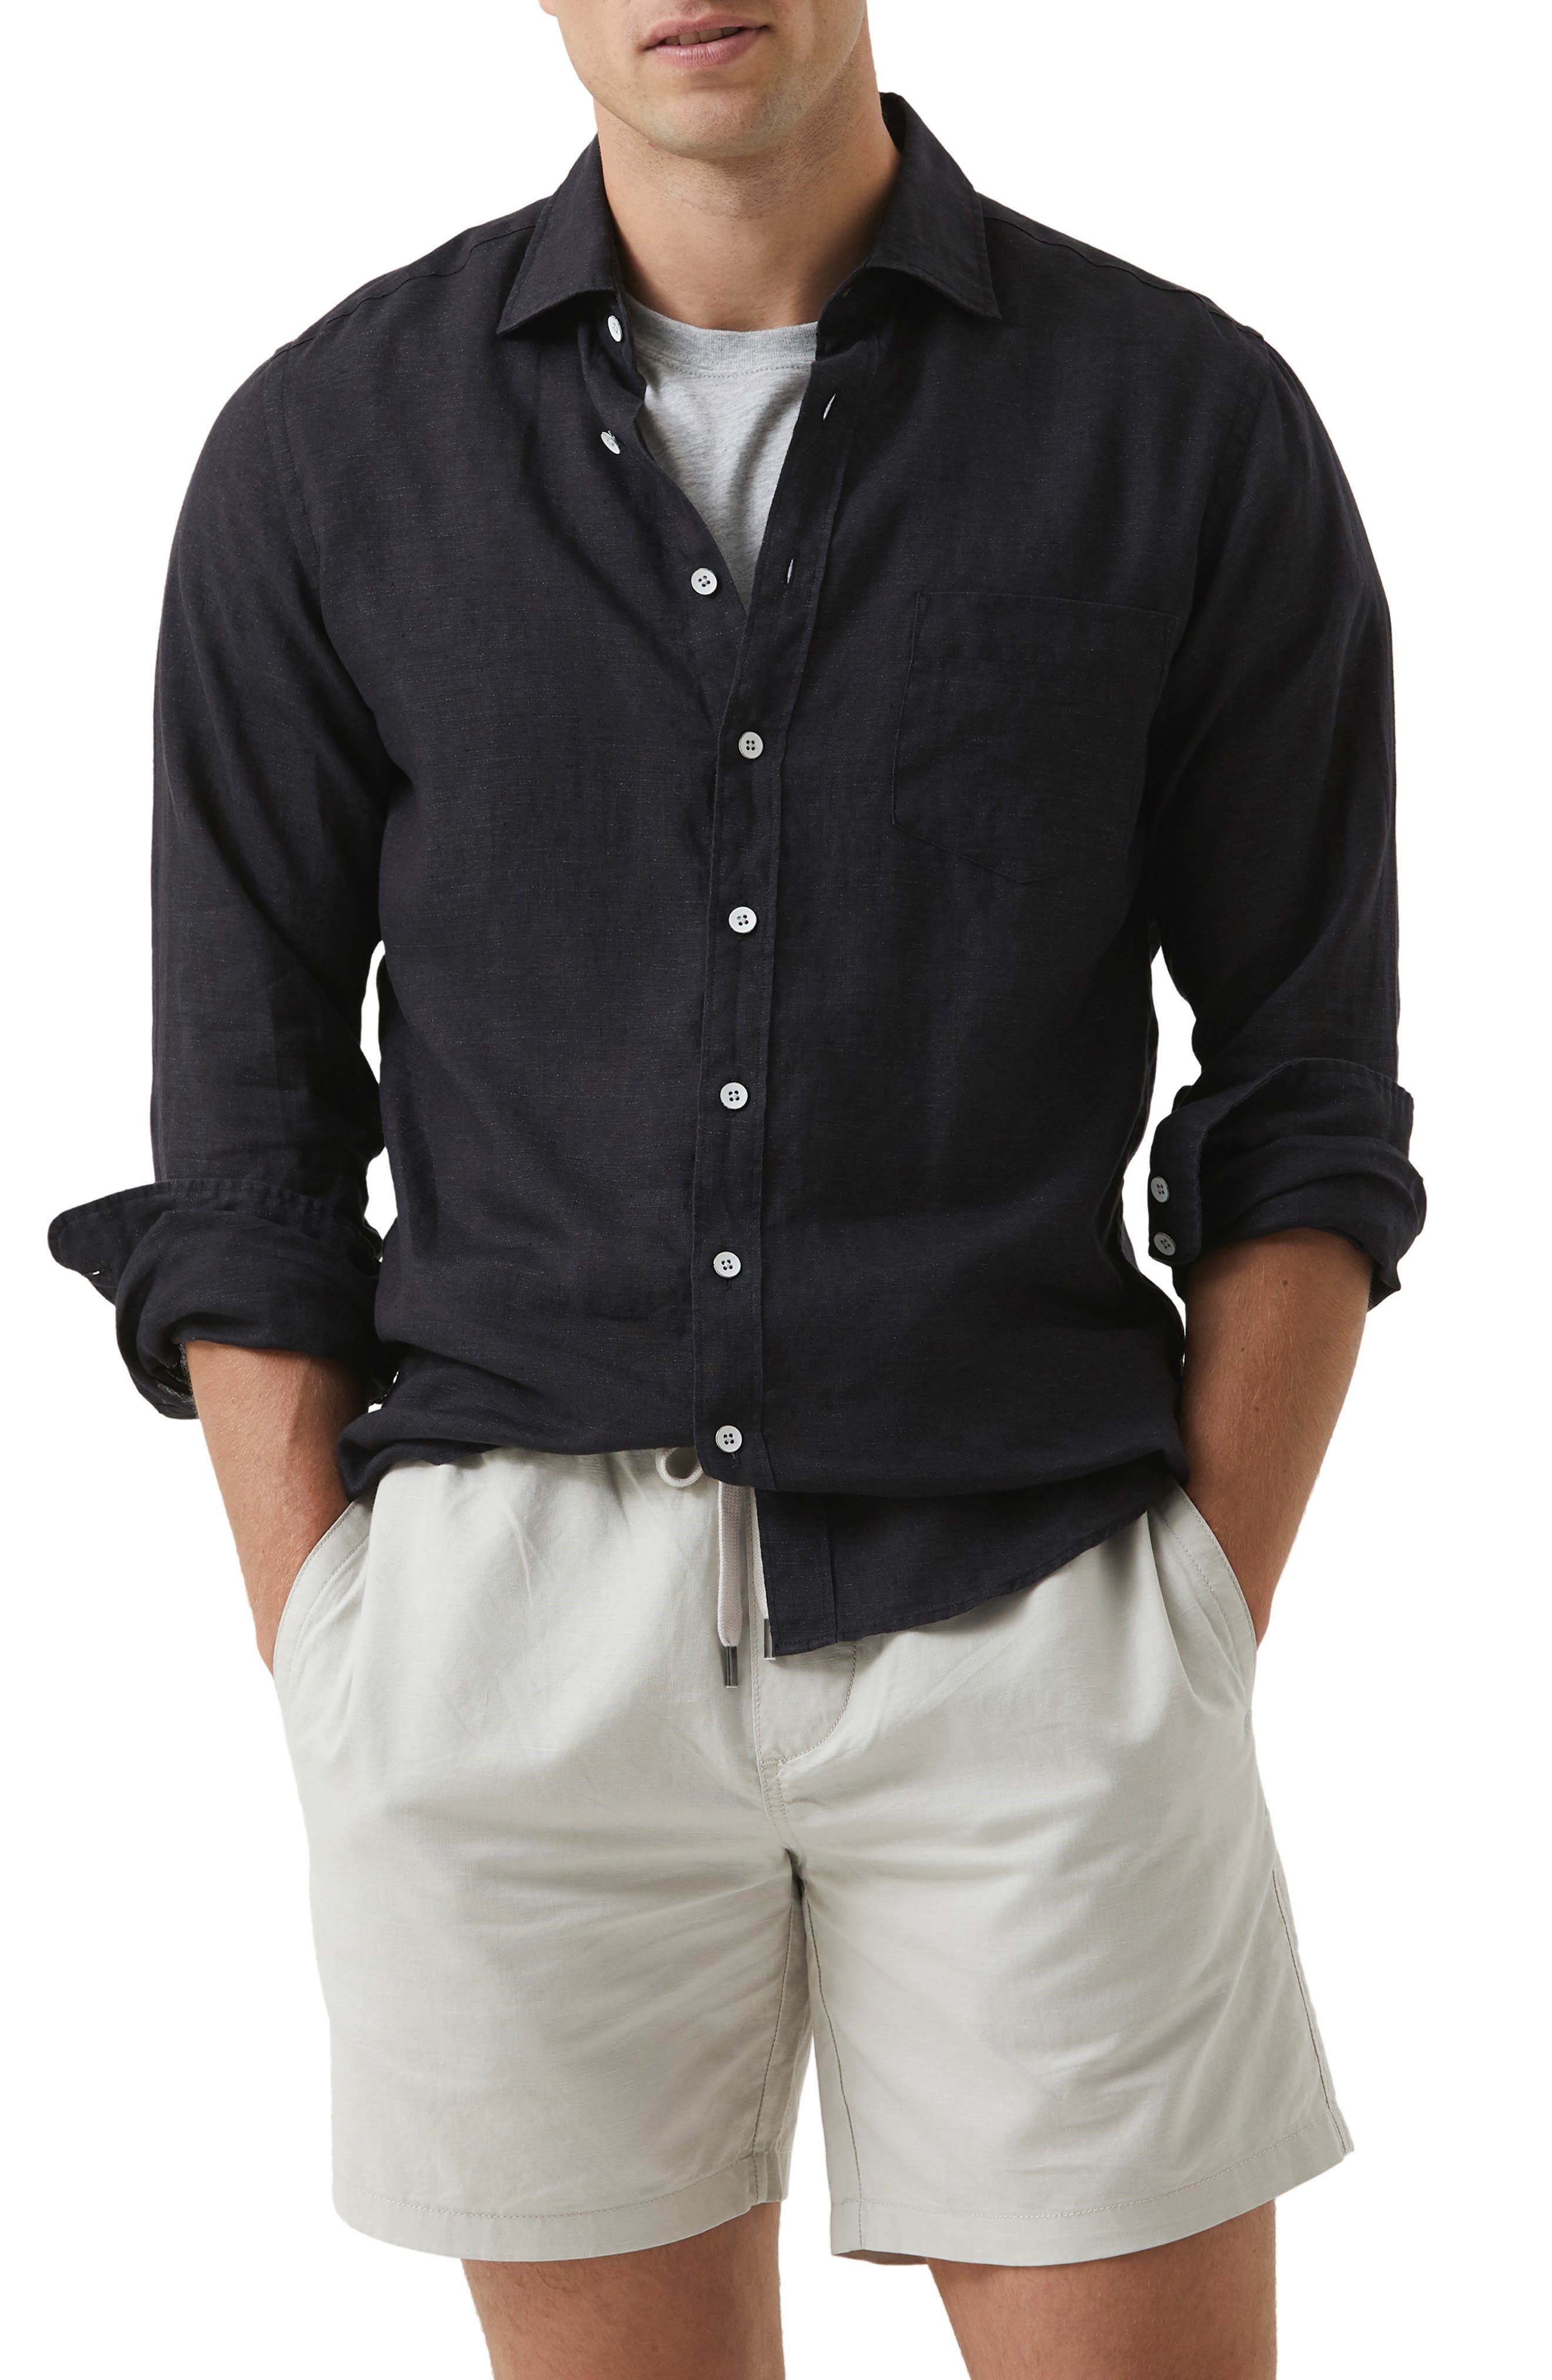 Men's Black Button Up Shirts | Nordstrom